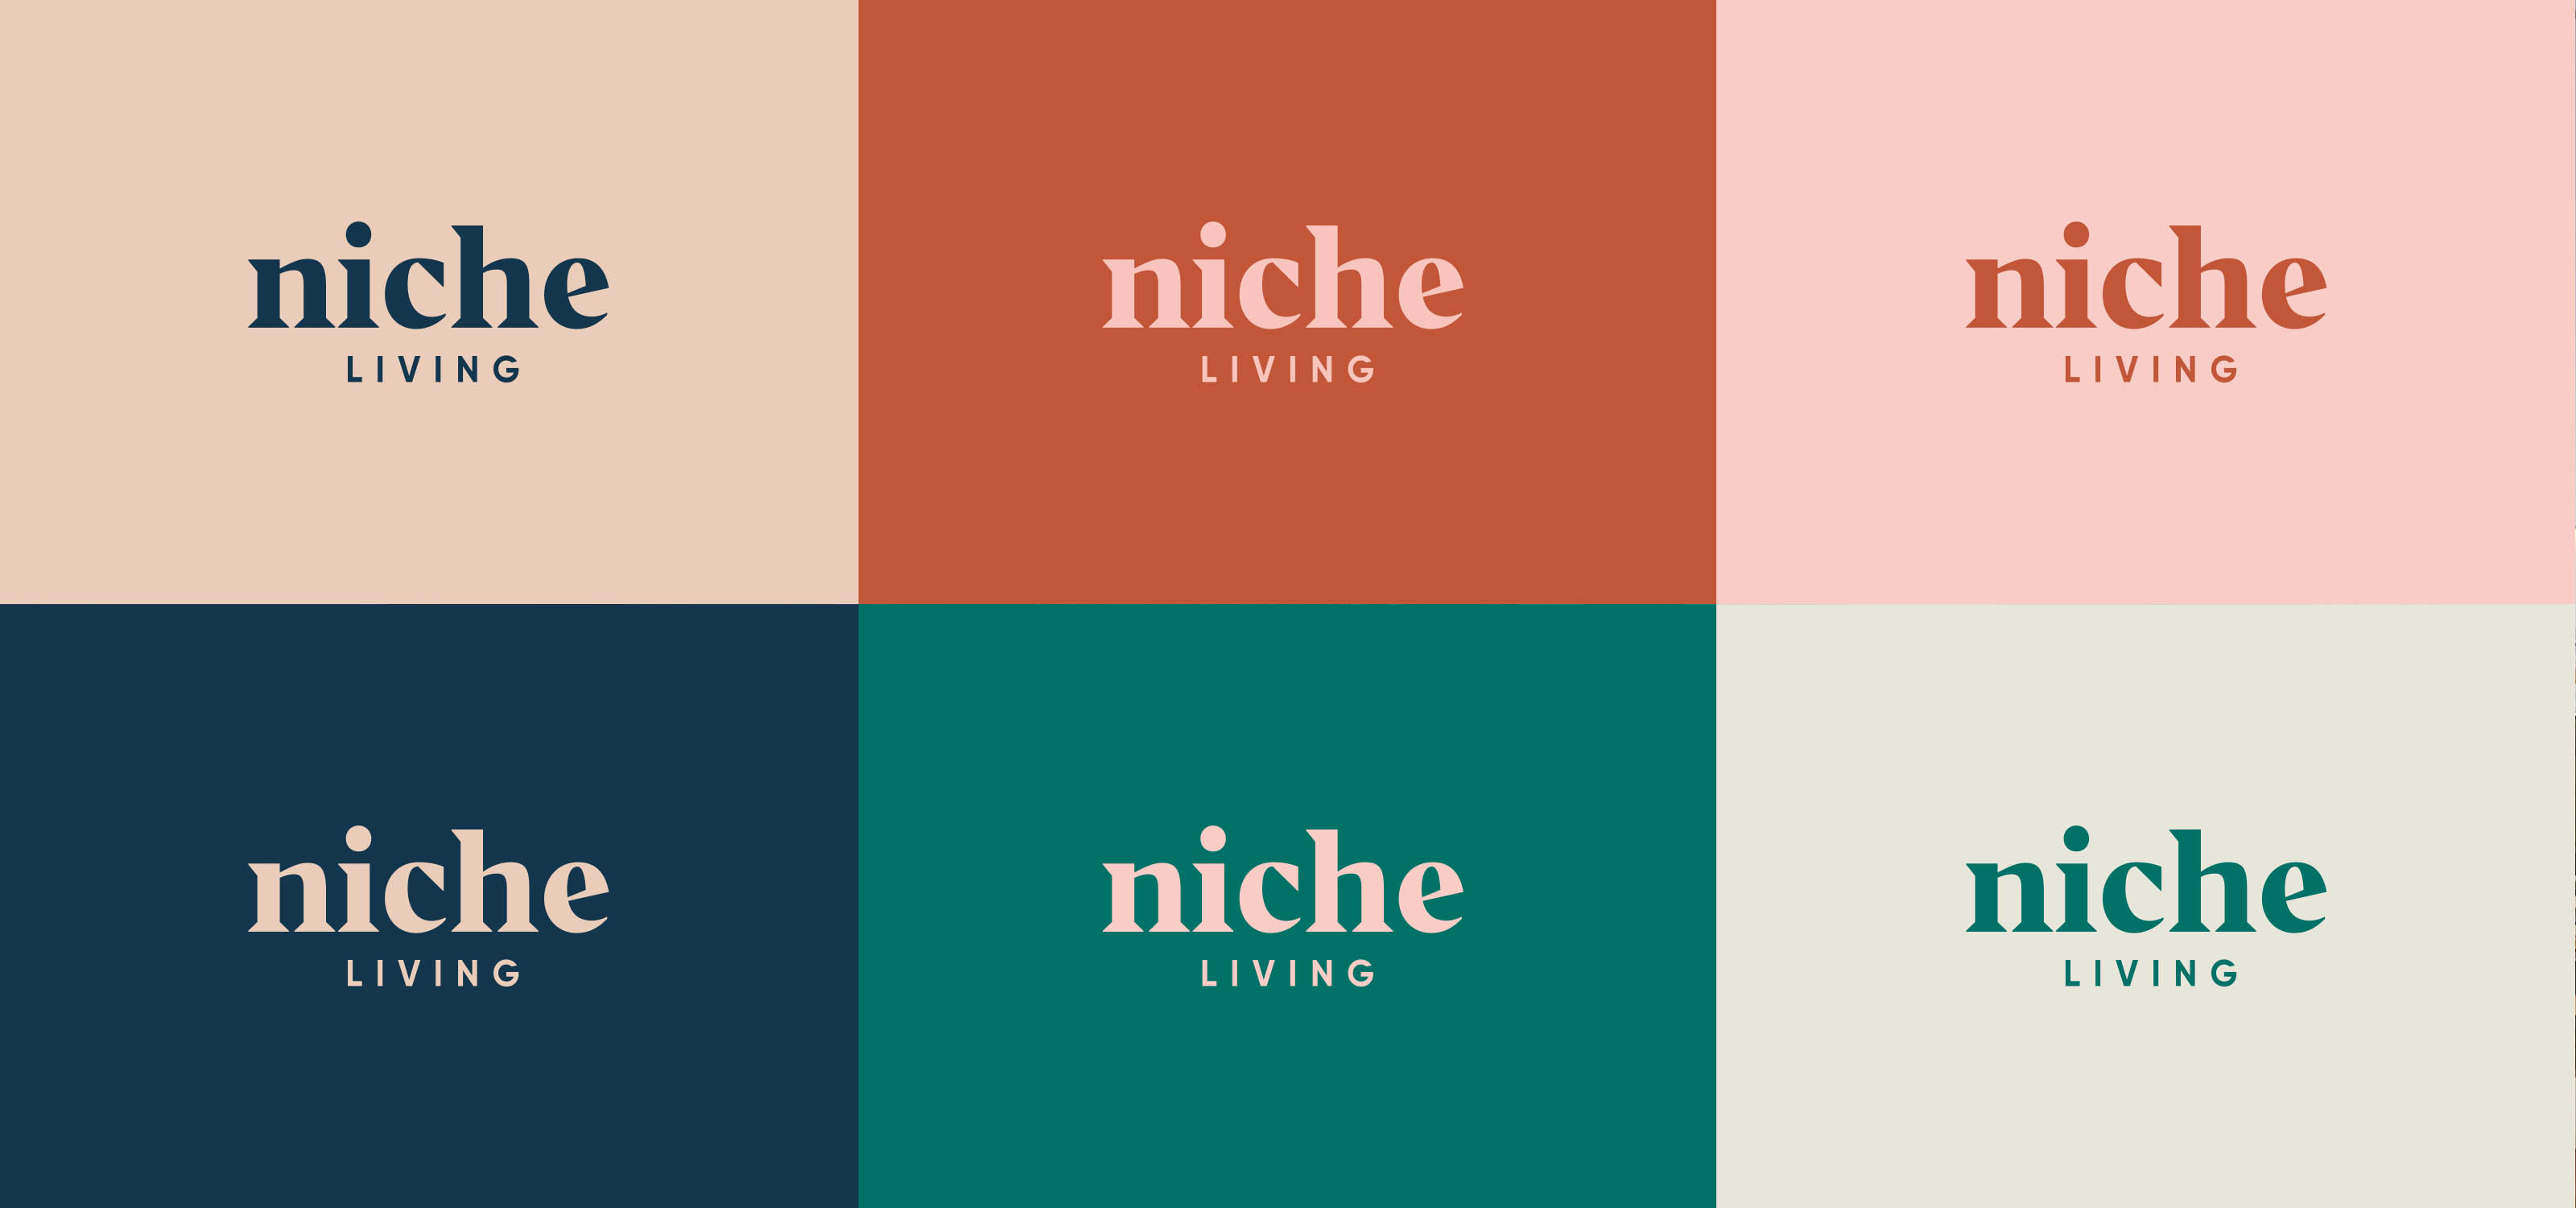 Niche Living 2